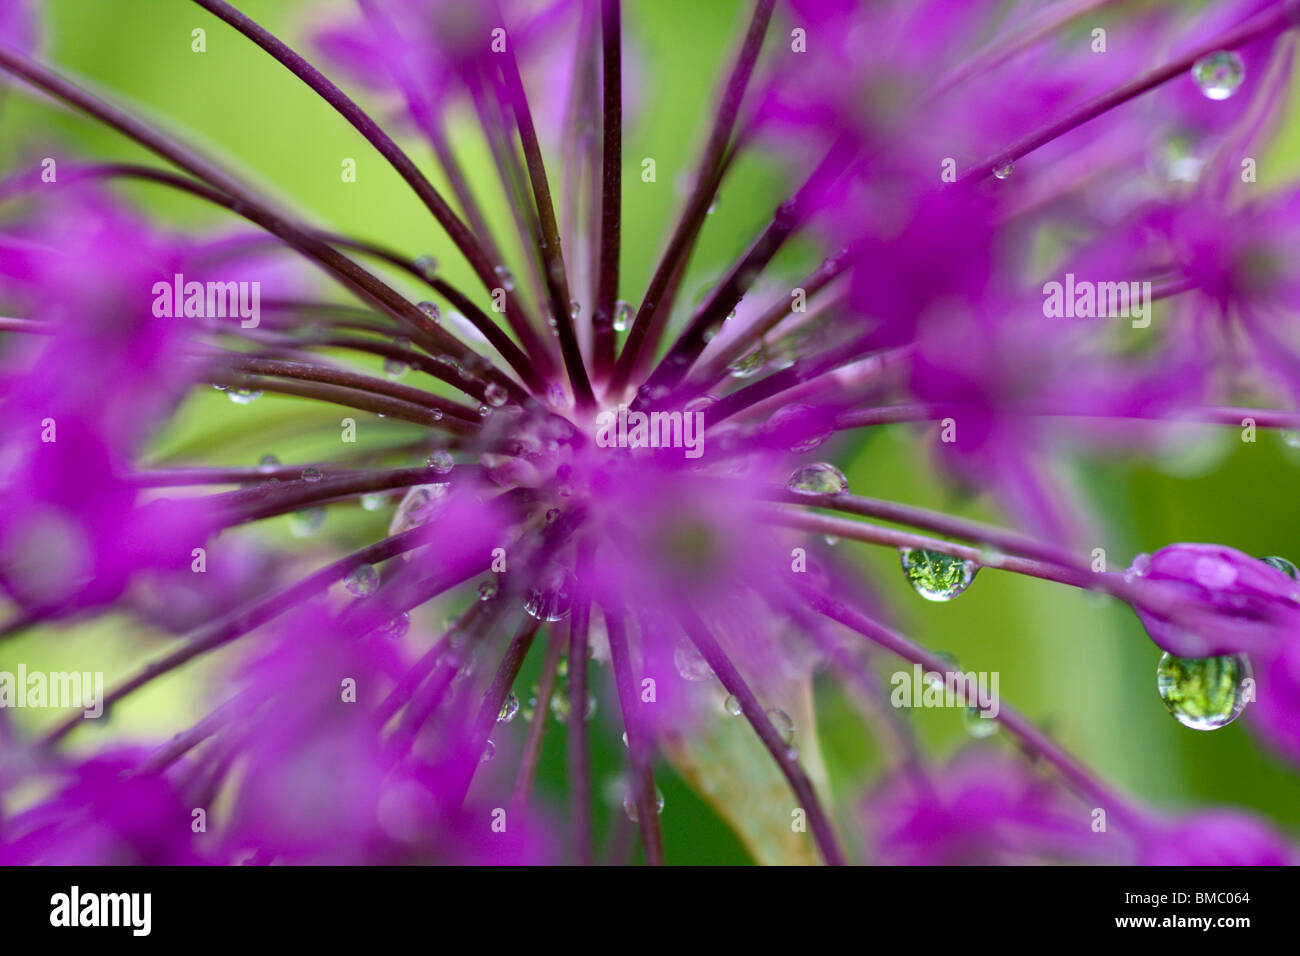 Macro of the rain drops on the purple flower. Stock Photo